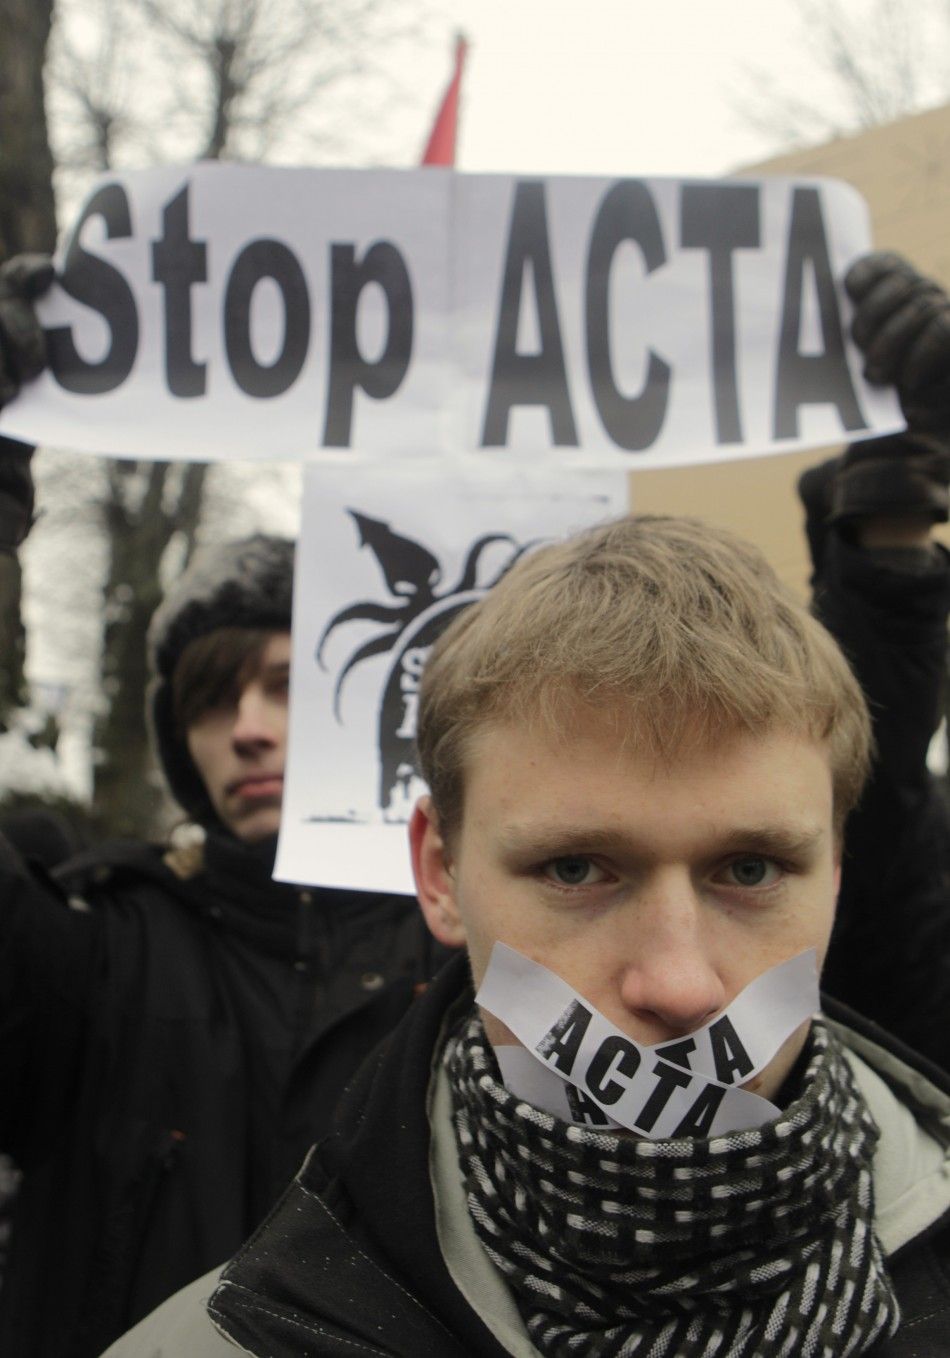 Riga Says No To Acta